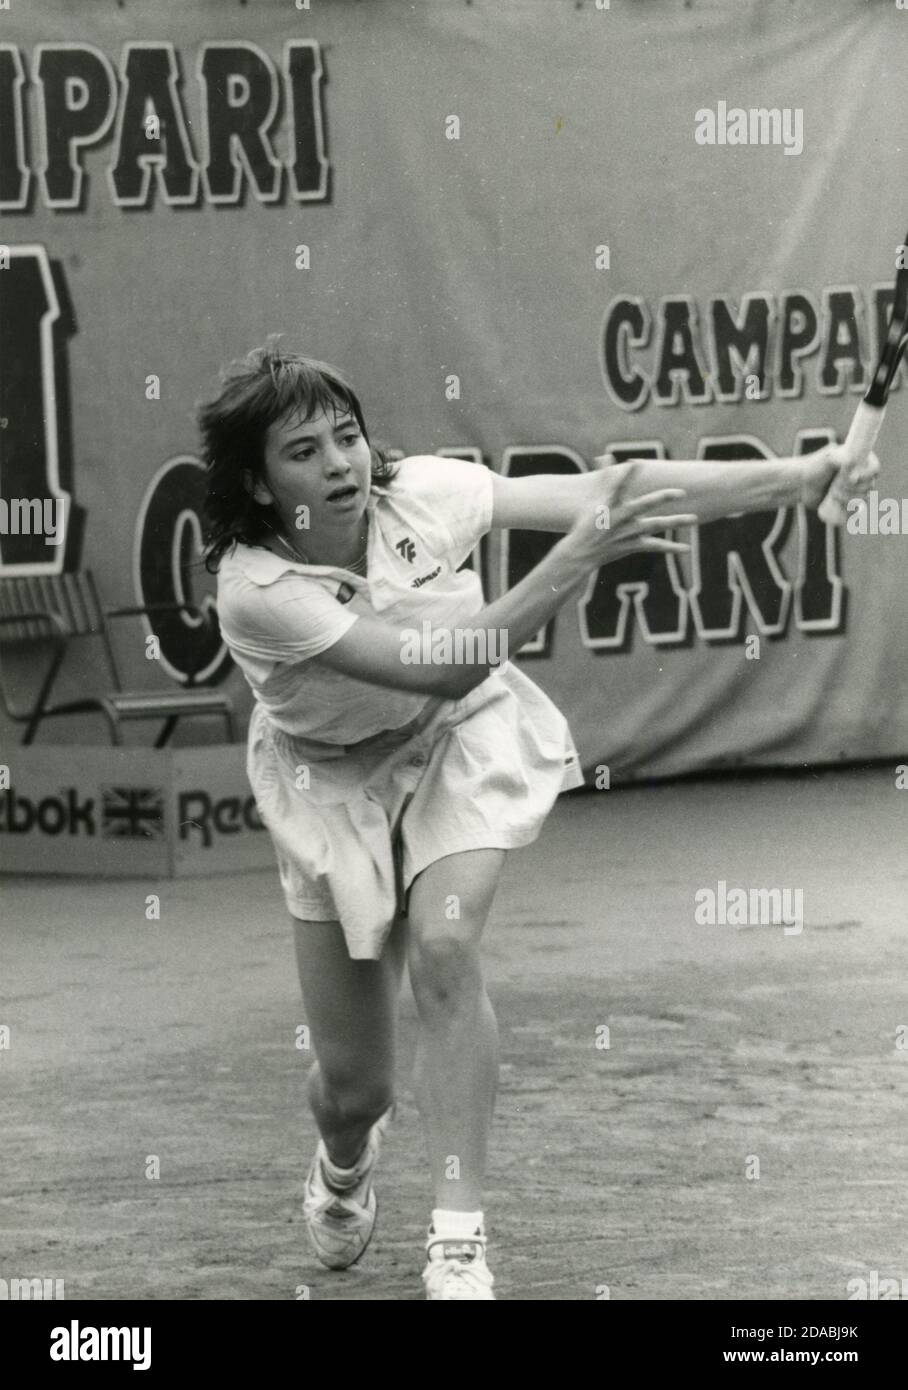 Tennis player Miller, 1988 Stock Photo